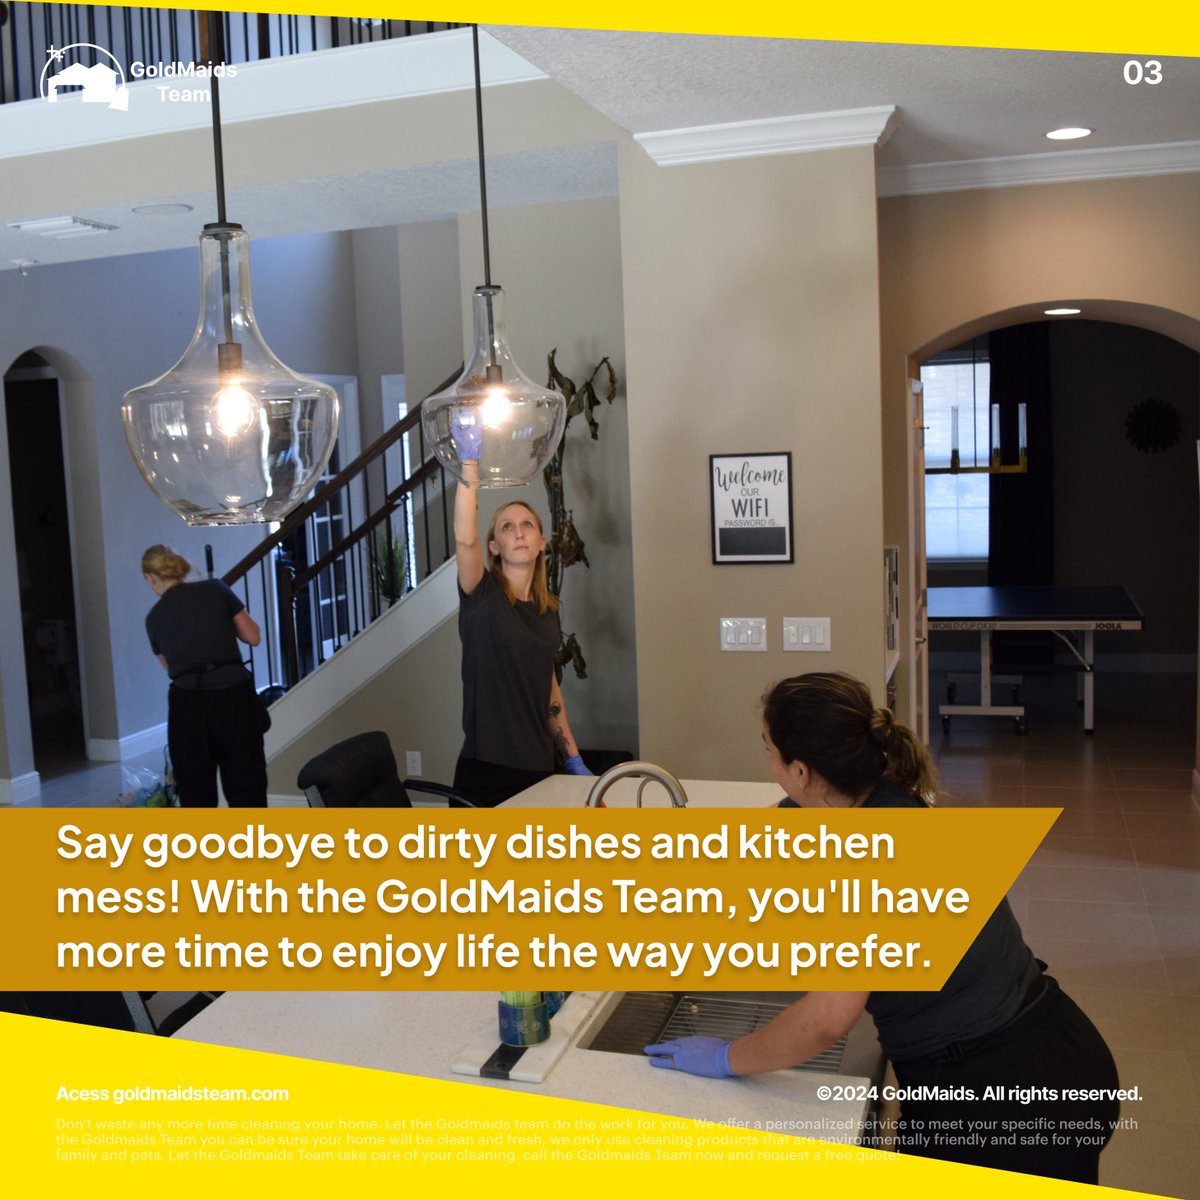 goldmaids_team tweet picture